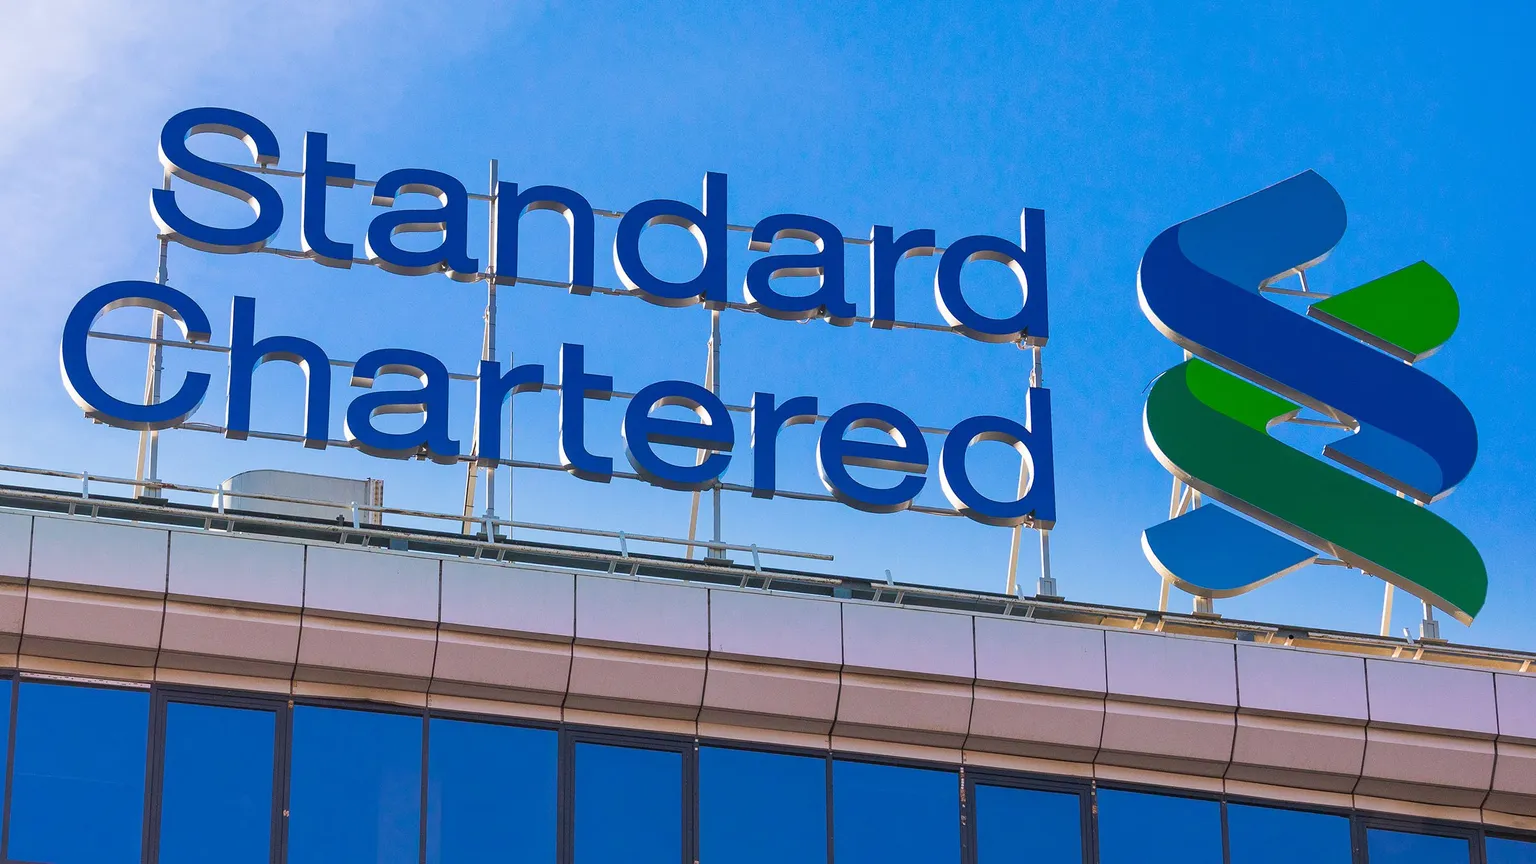 Standard Chartered company logo atop a building in Warsaw. Image: Konektus Photo / Shutterstock.com